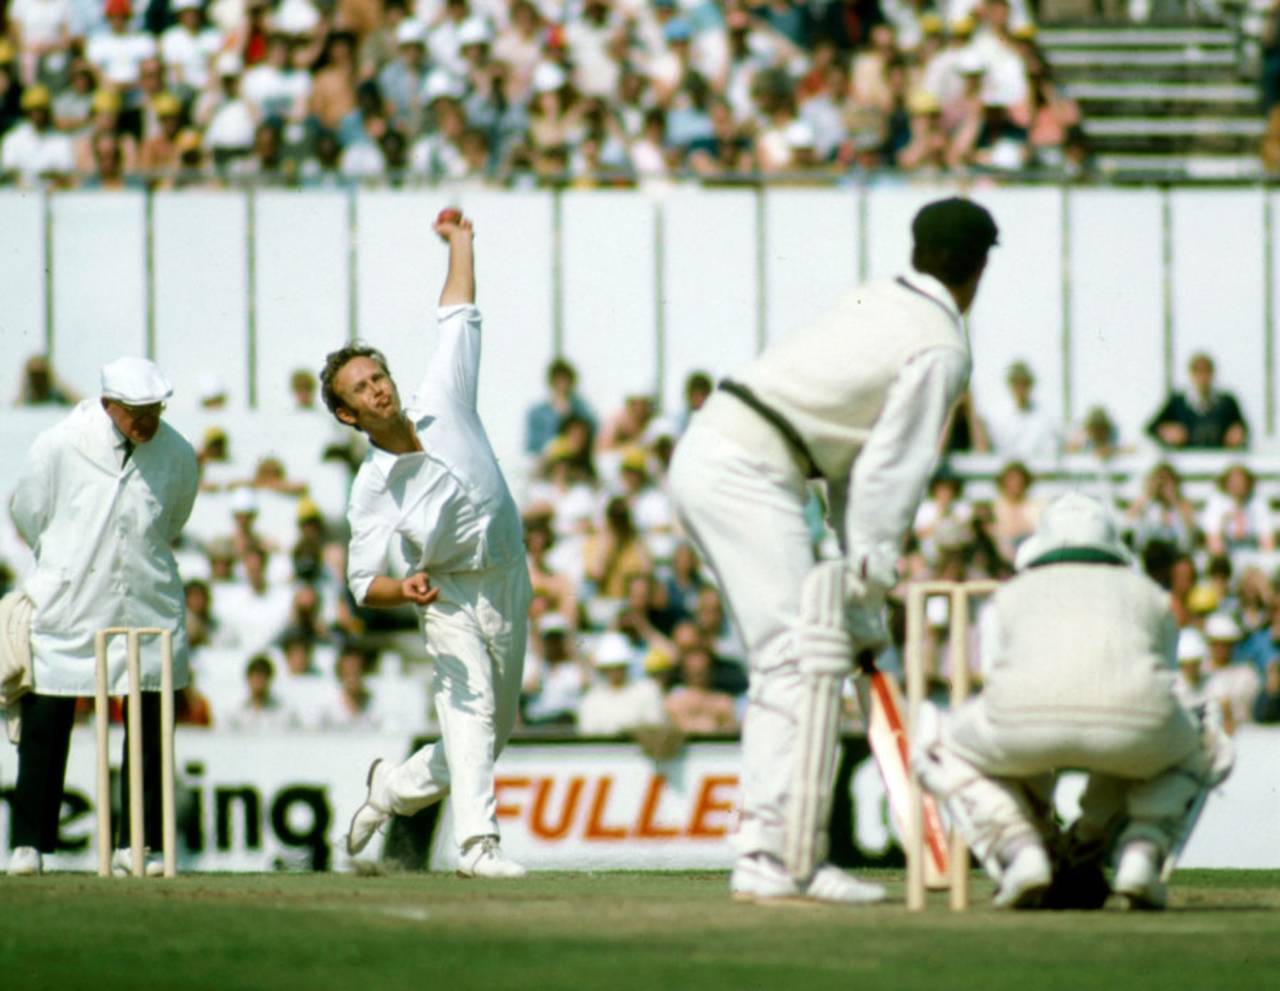 Derek Underwood bowls to Greg Chappell, England v Australia, 5th Test, The Oval, August 1977